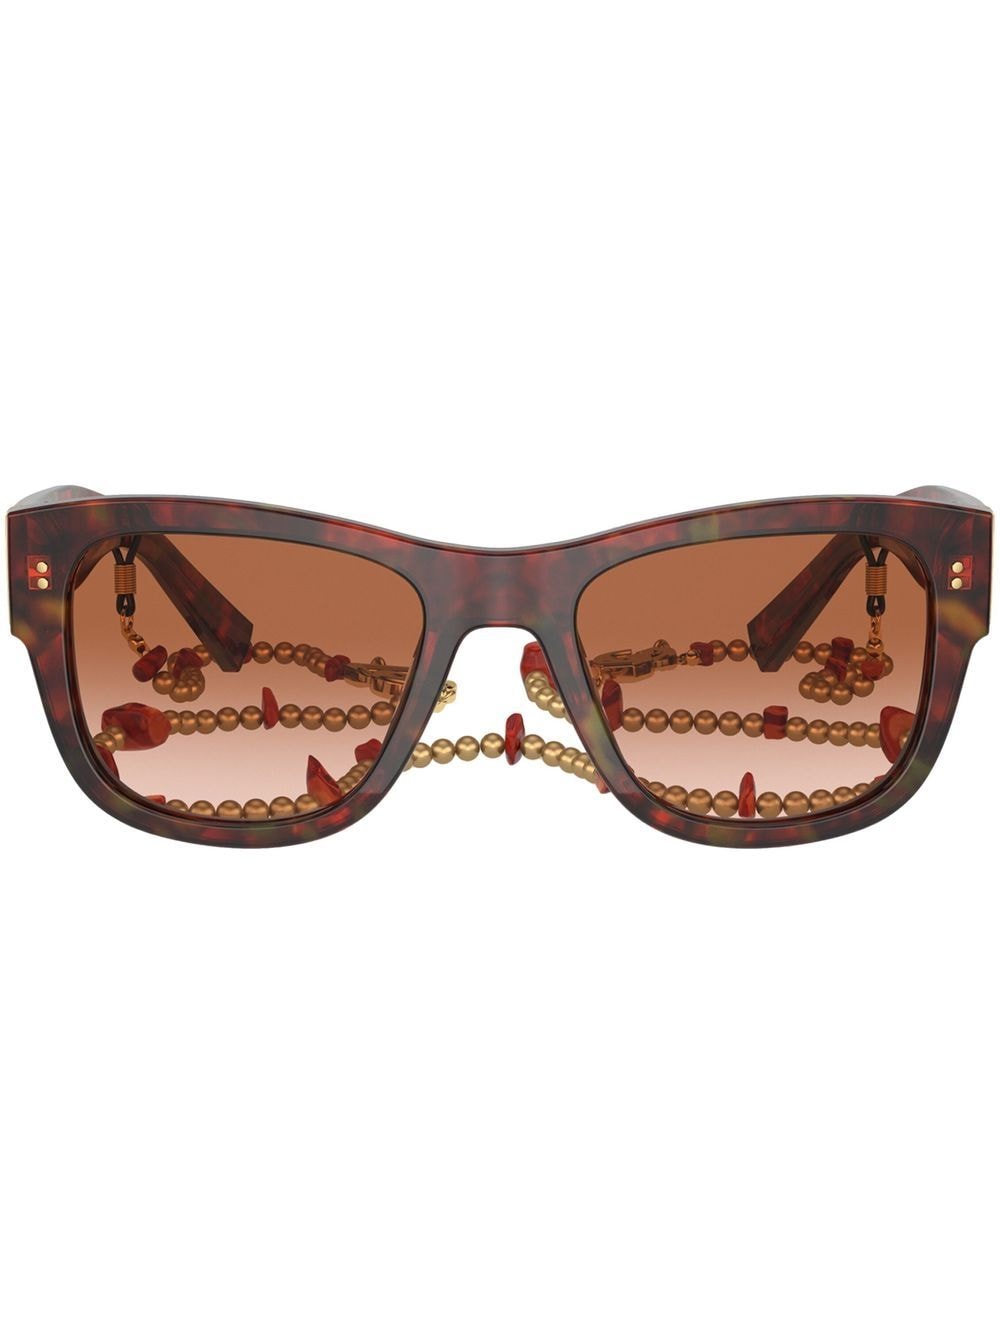 Dolce & Gabbana Eyewear Corallo square-frame sunglasses - Brown